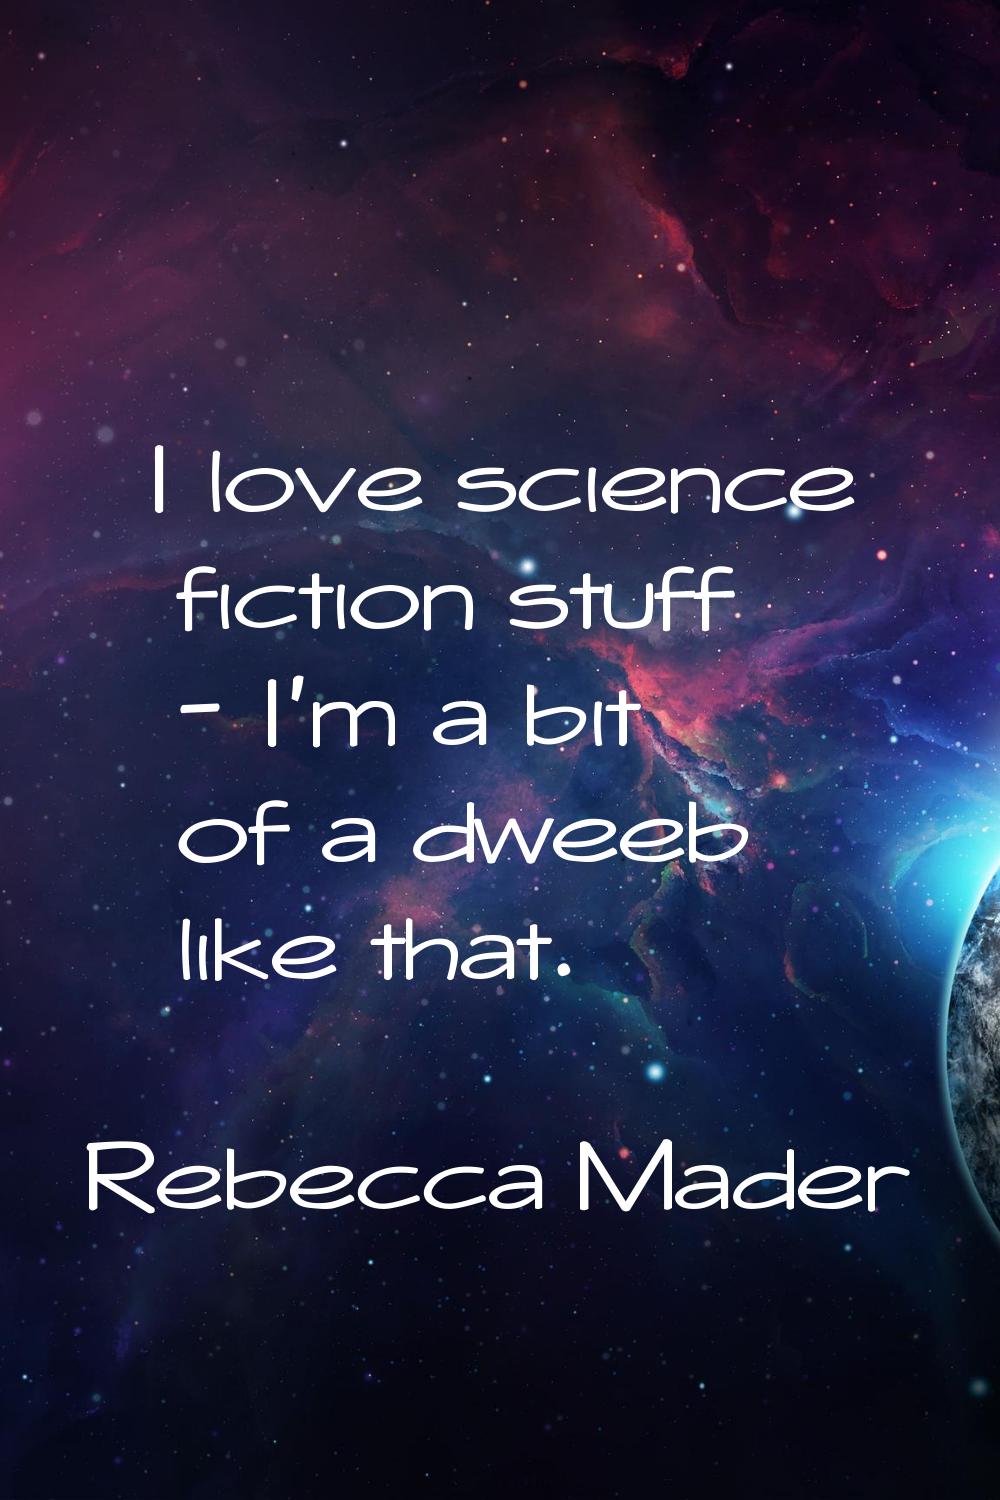 I love science fiction stuff - I'm a bit of a dweeb like that.